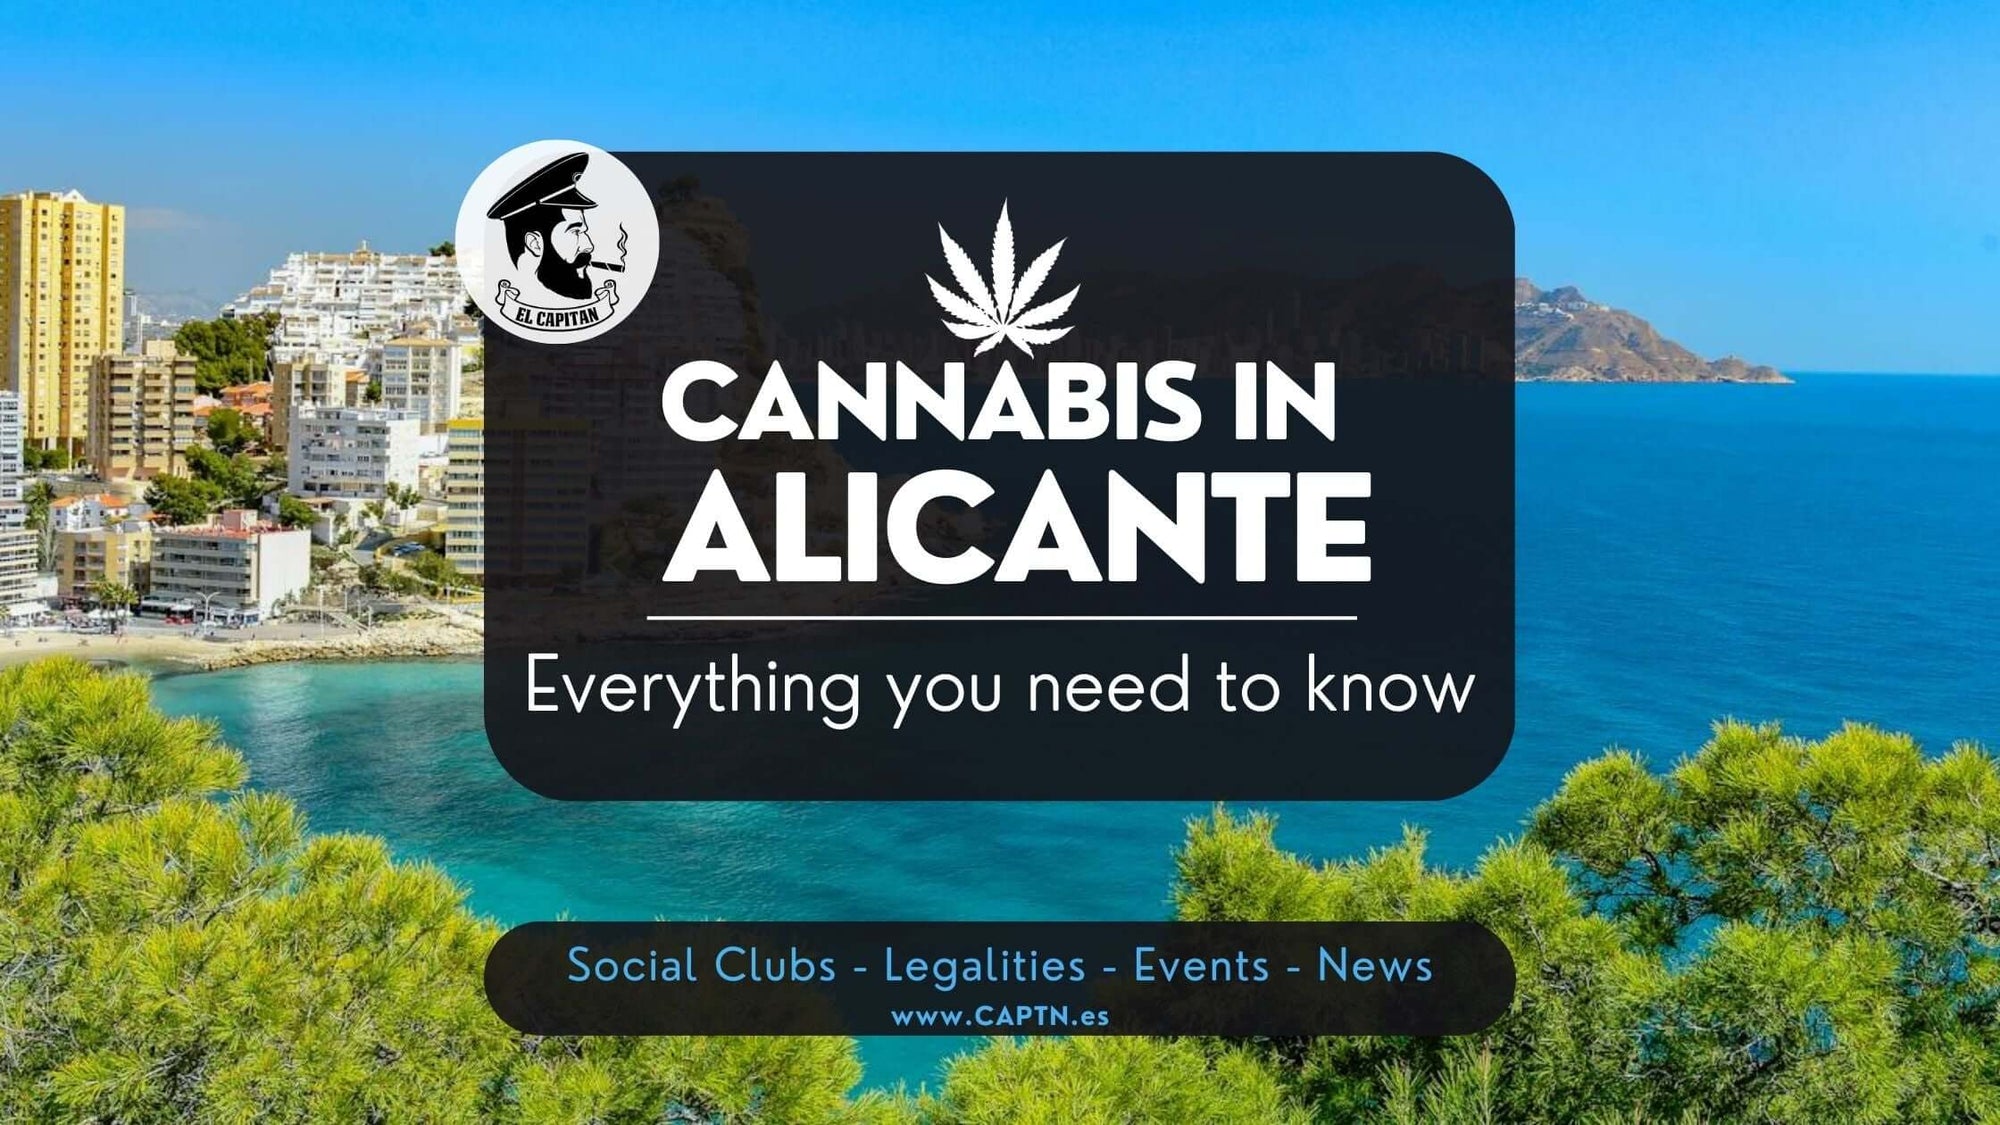 Find Cannabis in Alicante by el capitan on the beach